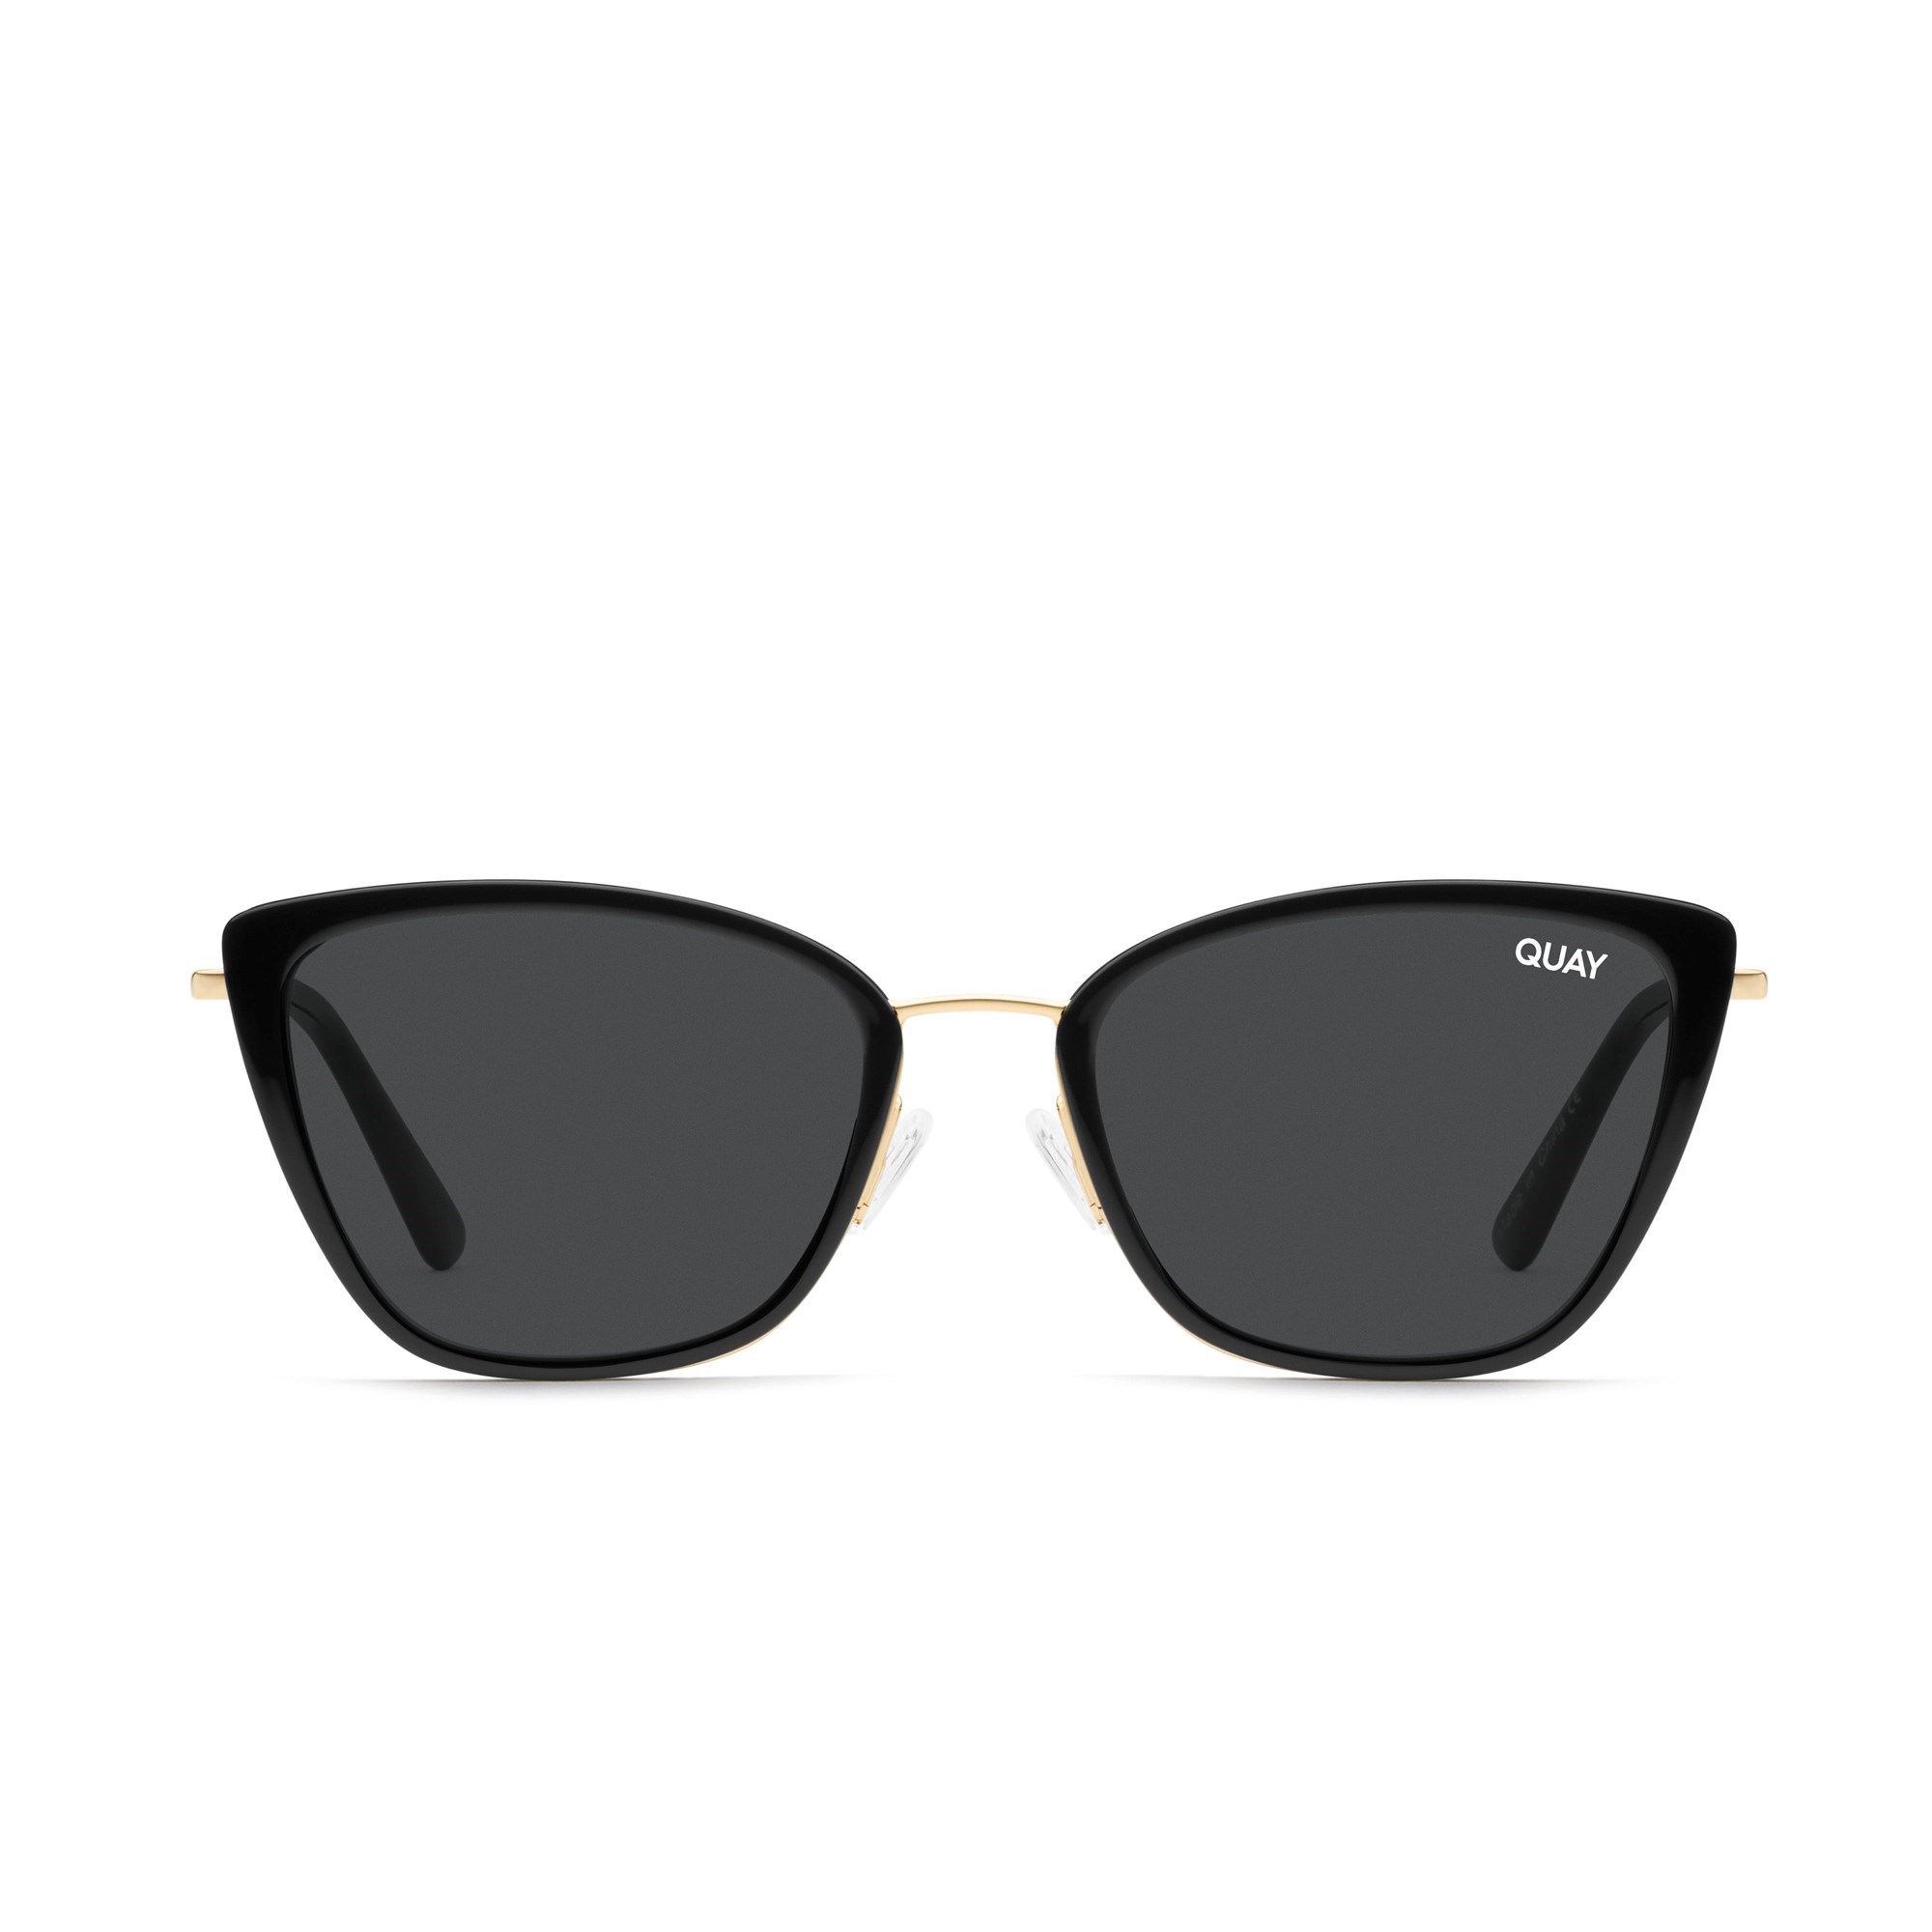 Oakley Prescription Sunglasses Australia Vast Selection | tep.do